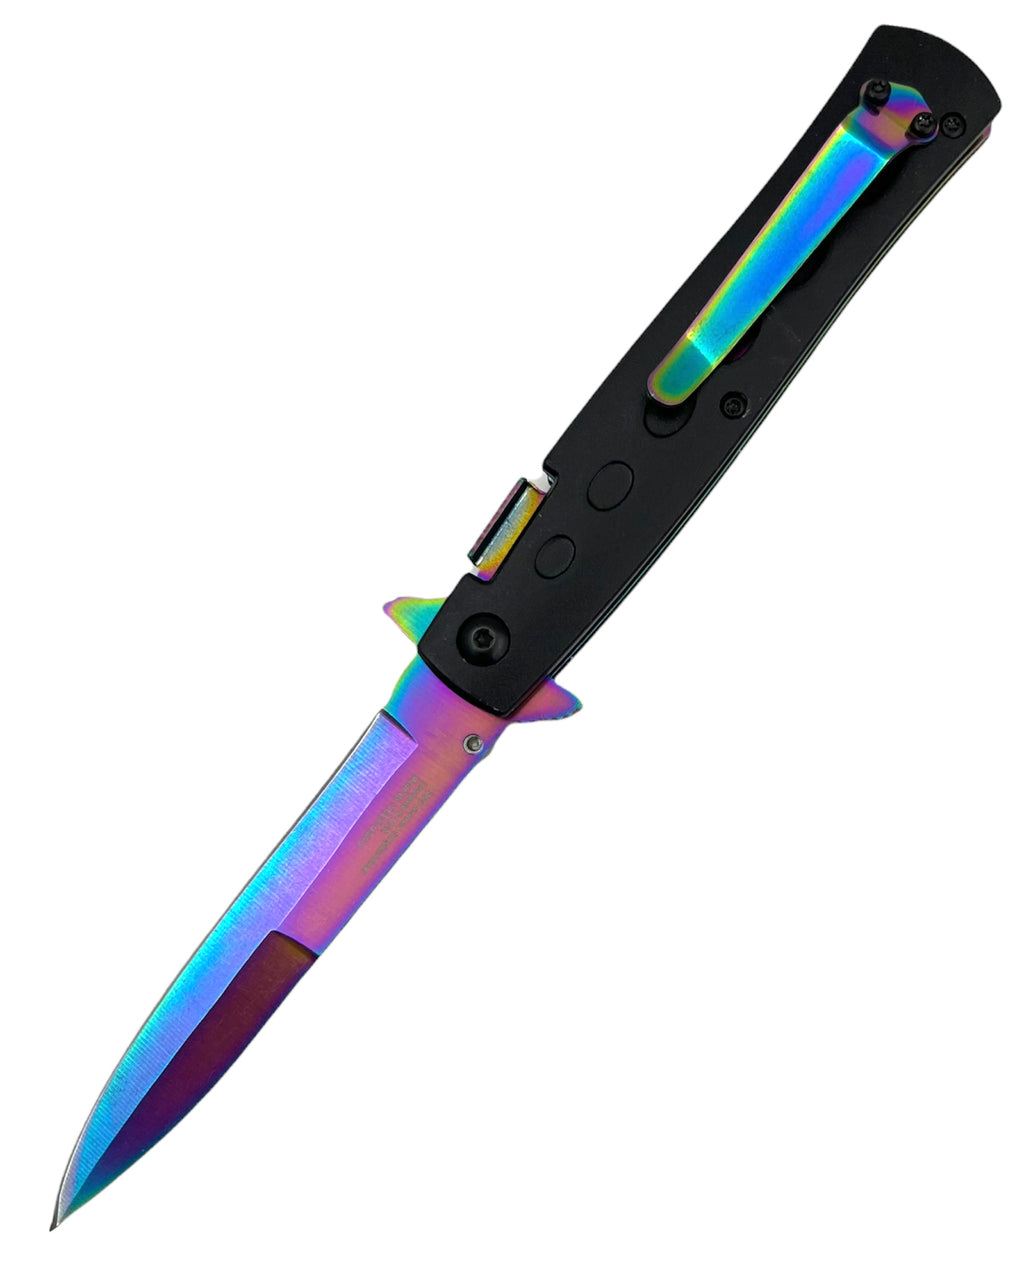 Tiger-USA® folding BLACK and RAINBOW  knife